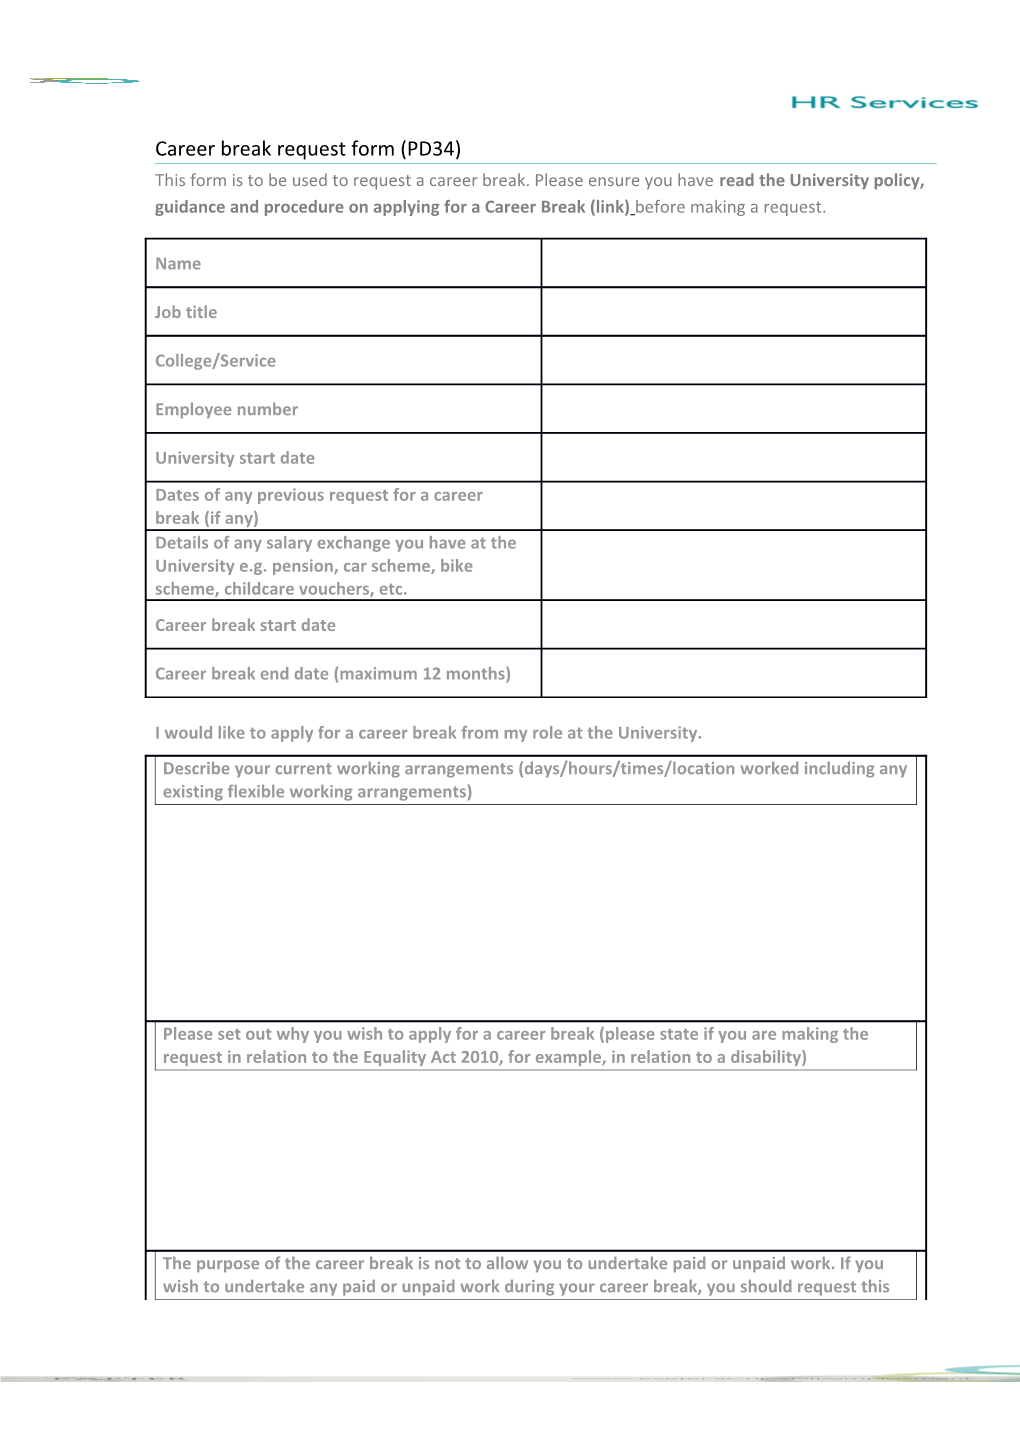 Career Break Request Form (PD34)